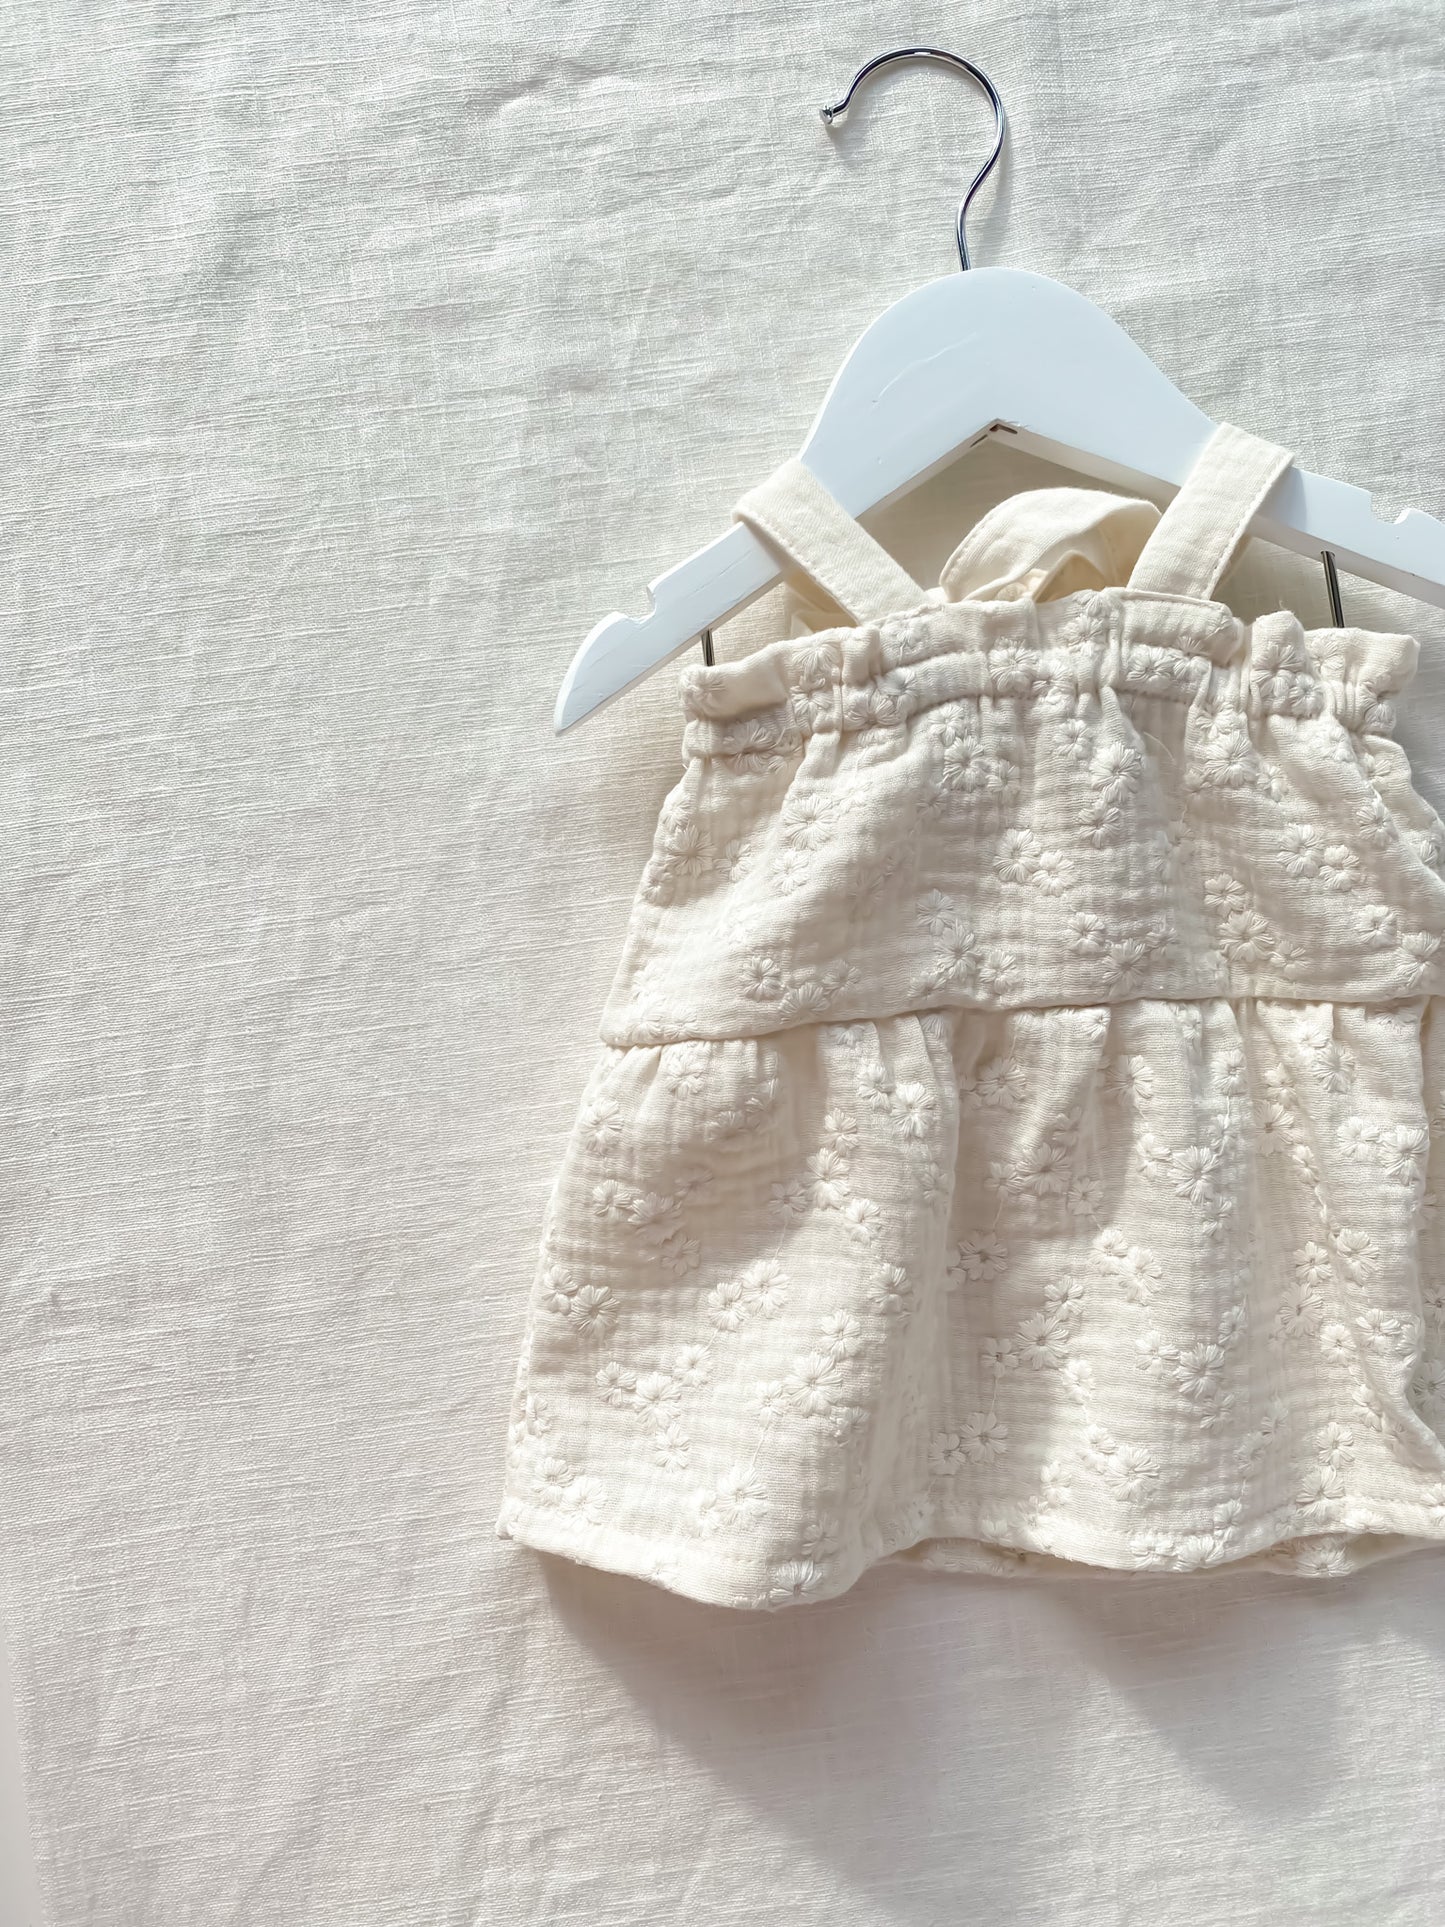 Baby dress / embroidered muslin - ecru